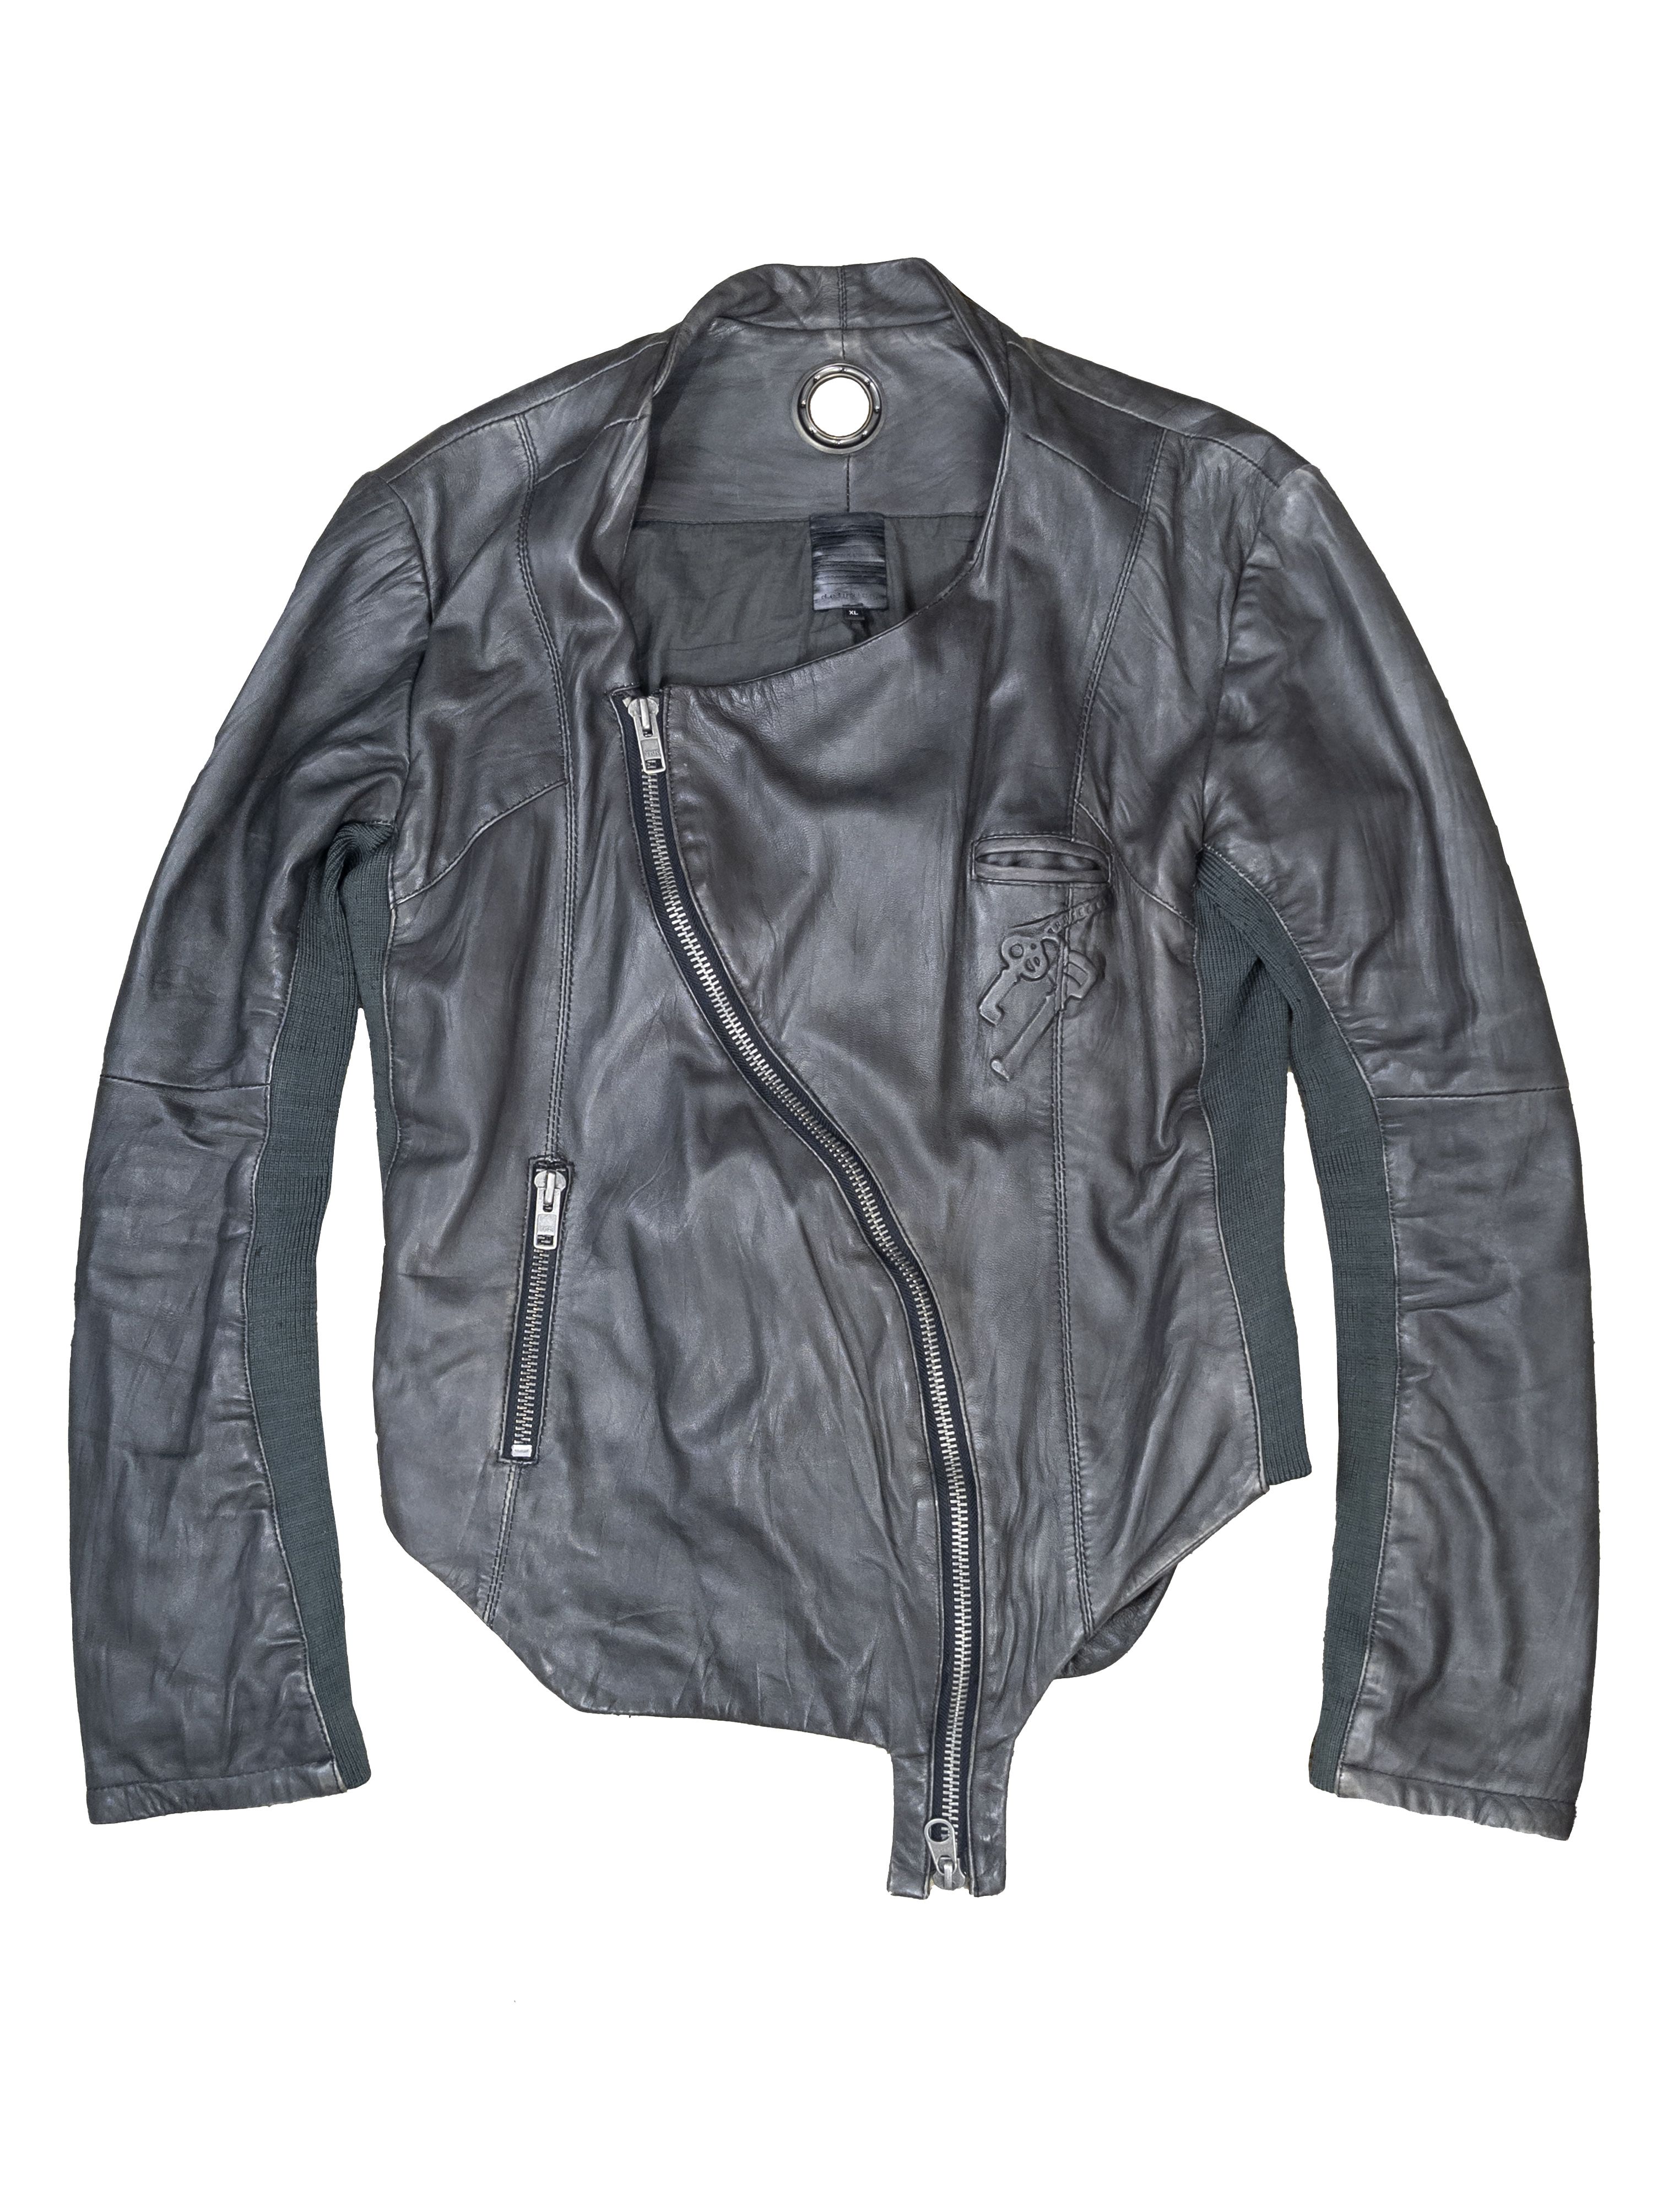 Delusion Delusion futuristic designer men's leather biker jacket Size US XL / EU 56 / 4 - 1 Preview